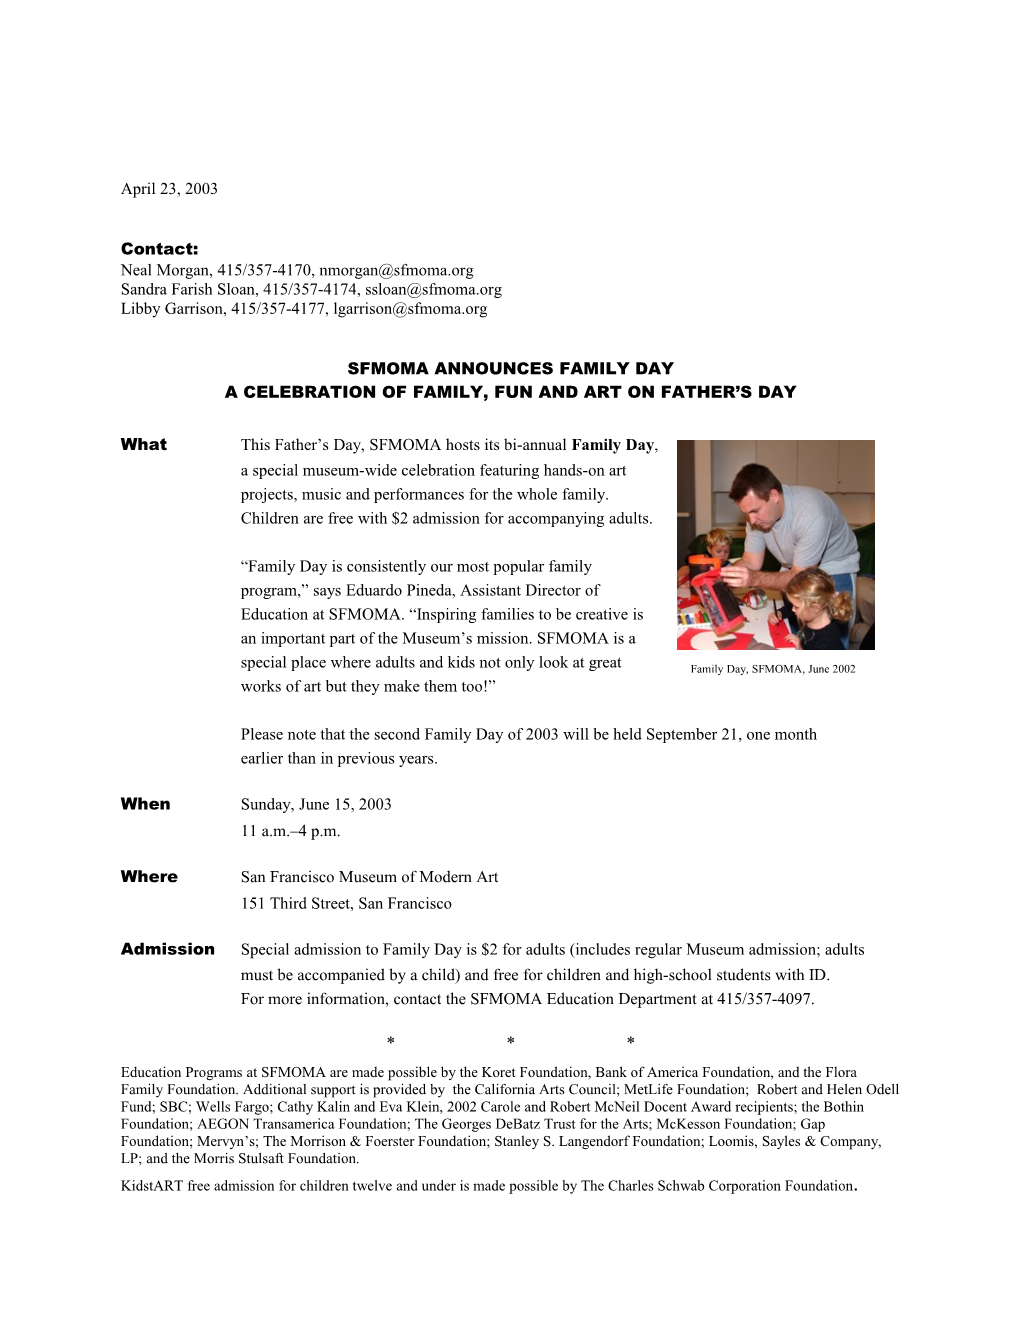 SFMOMA Press Room Press Release: Family Day, June 15, 2003